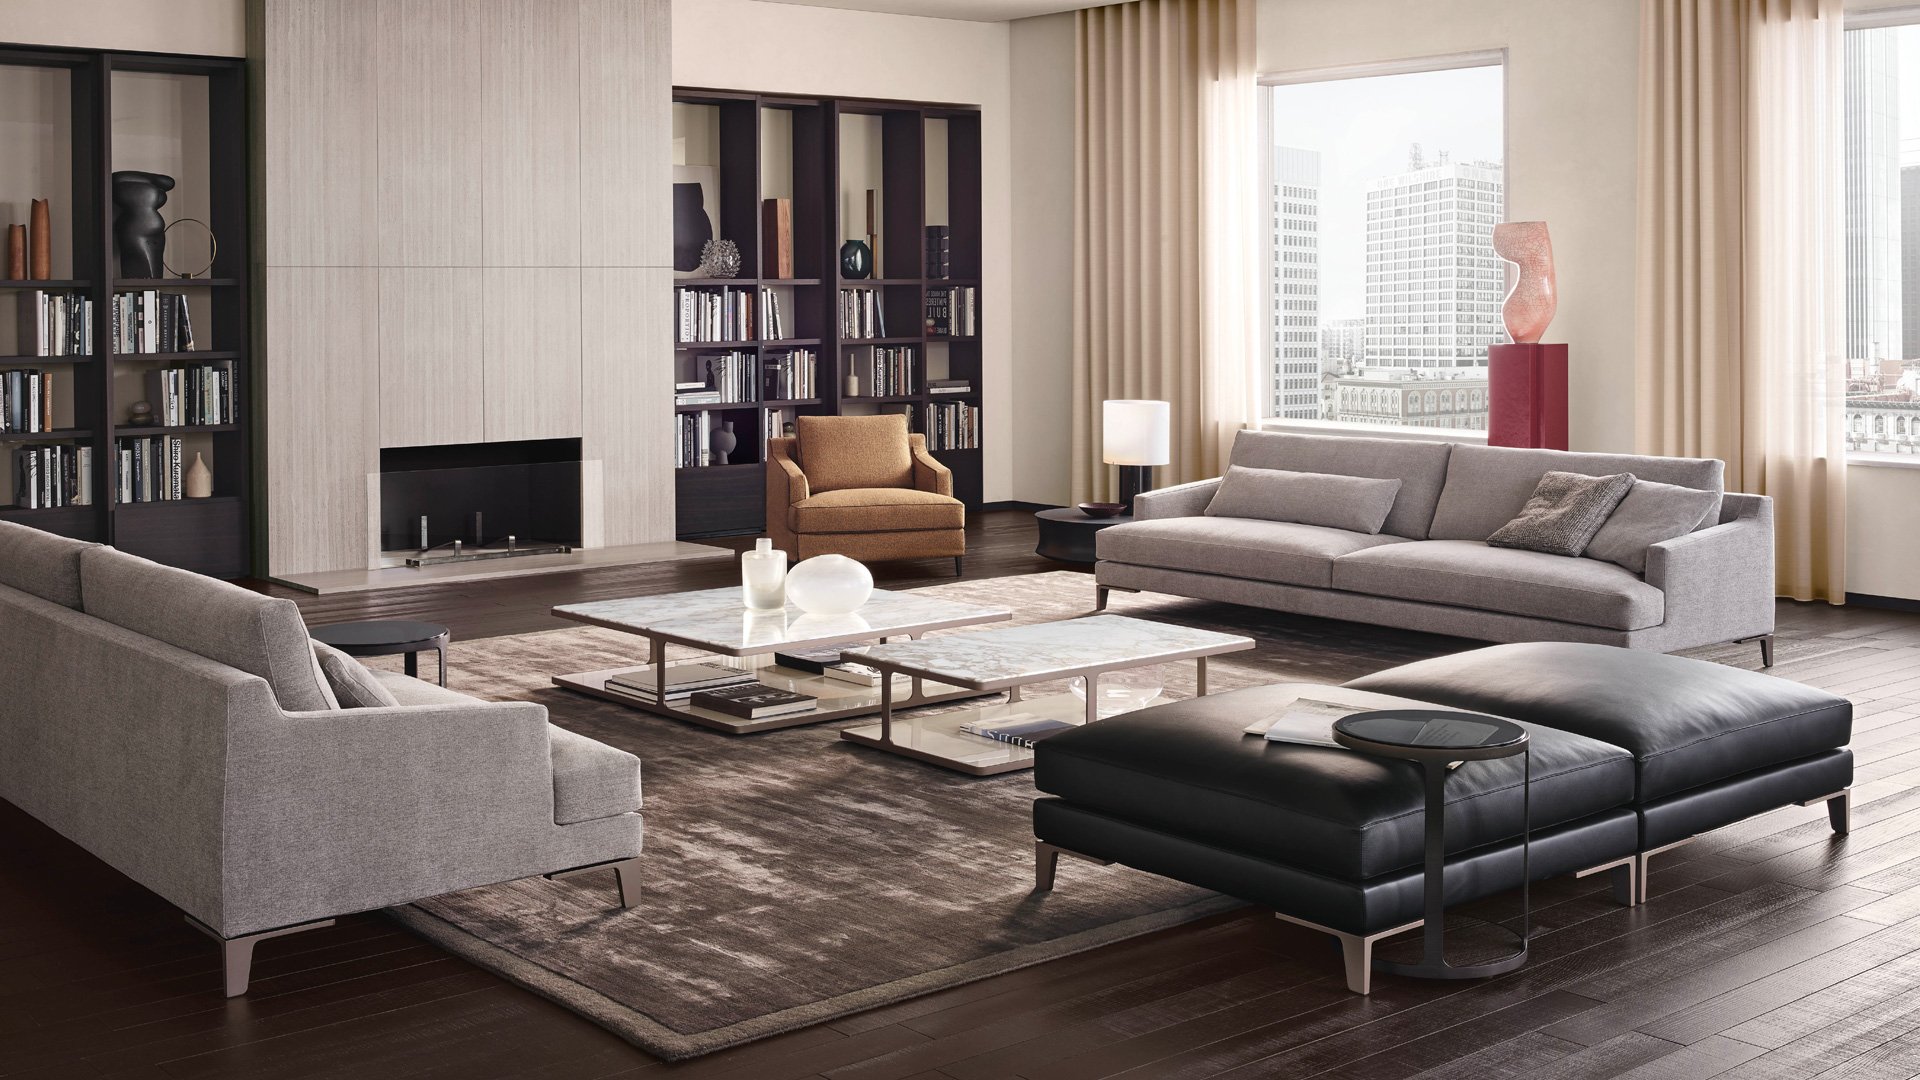 Sofa living room furniture Takis Angelides Furnihome Poliform Cyprus